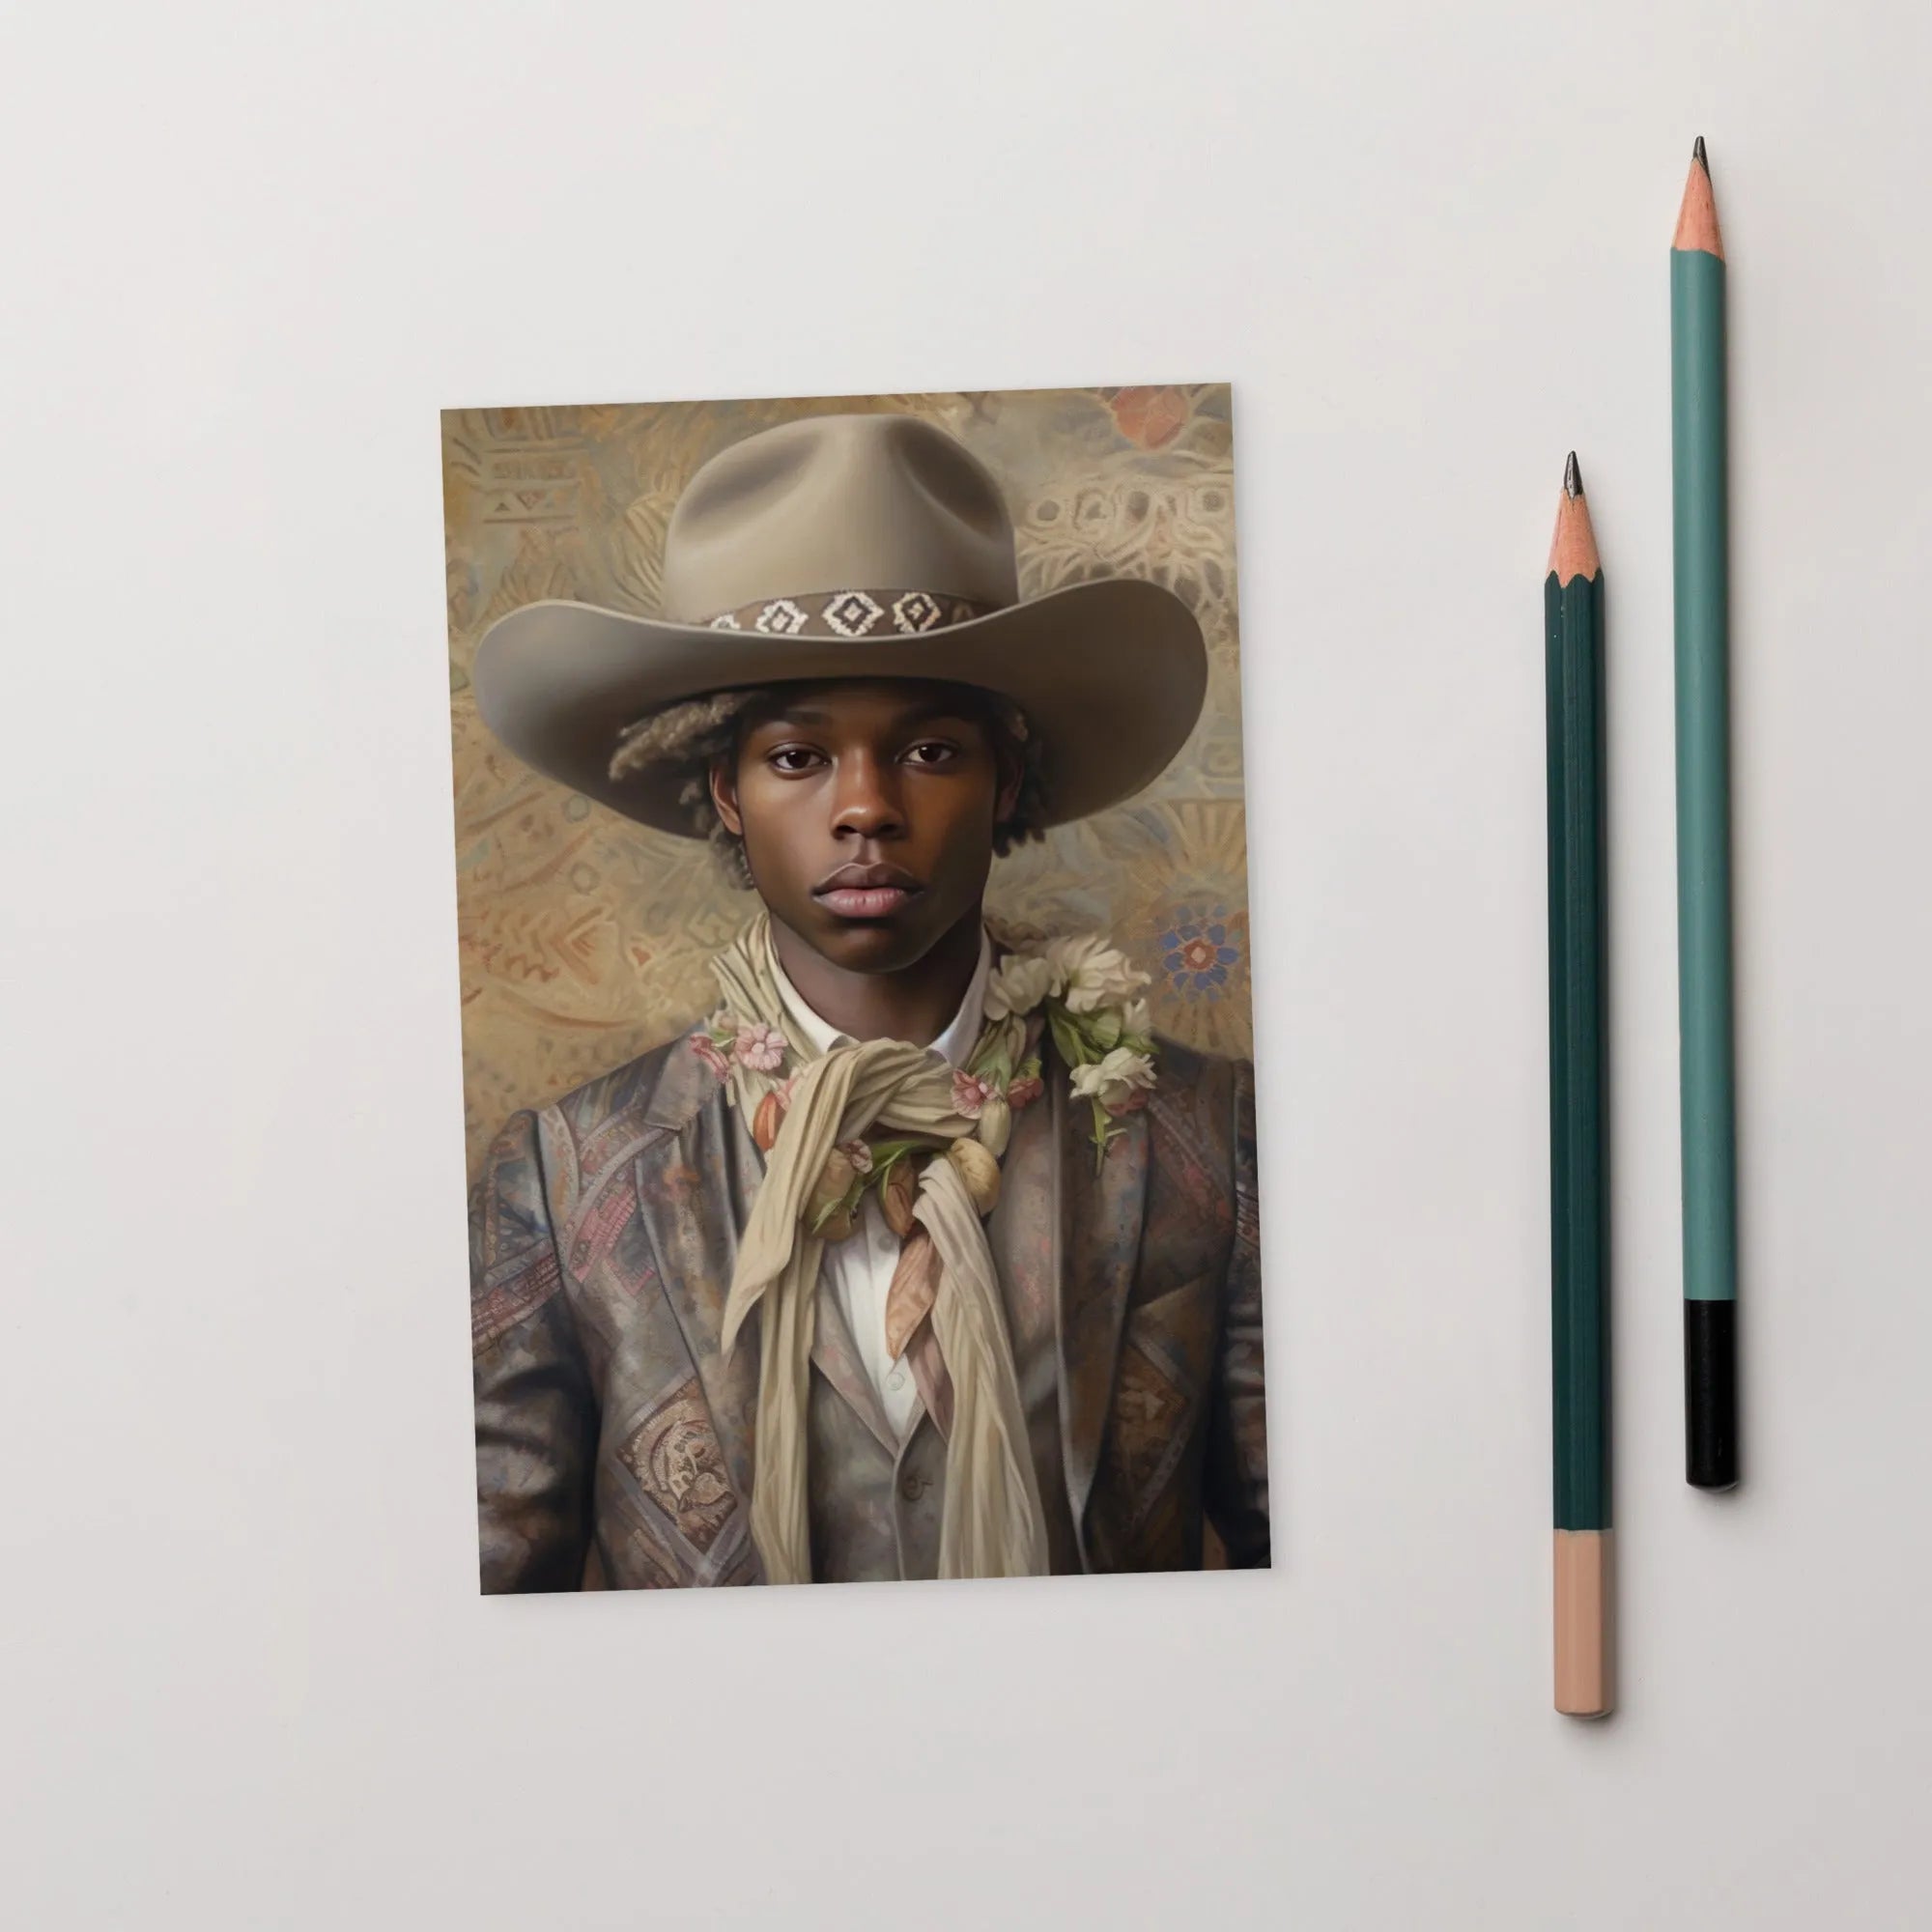 Lysander - Gay Black Cowboy Art - Afroamerican Queerart Dandy - 4’x6’ - Posters Prints & Visual Artwork - Aesthetic Art